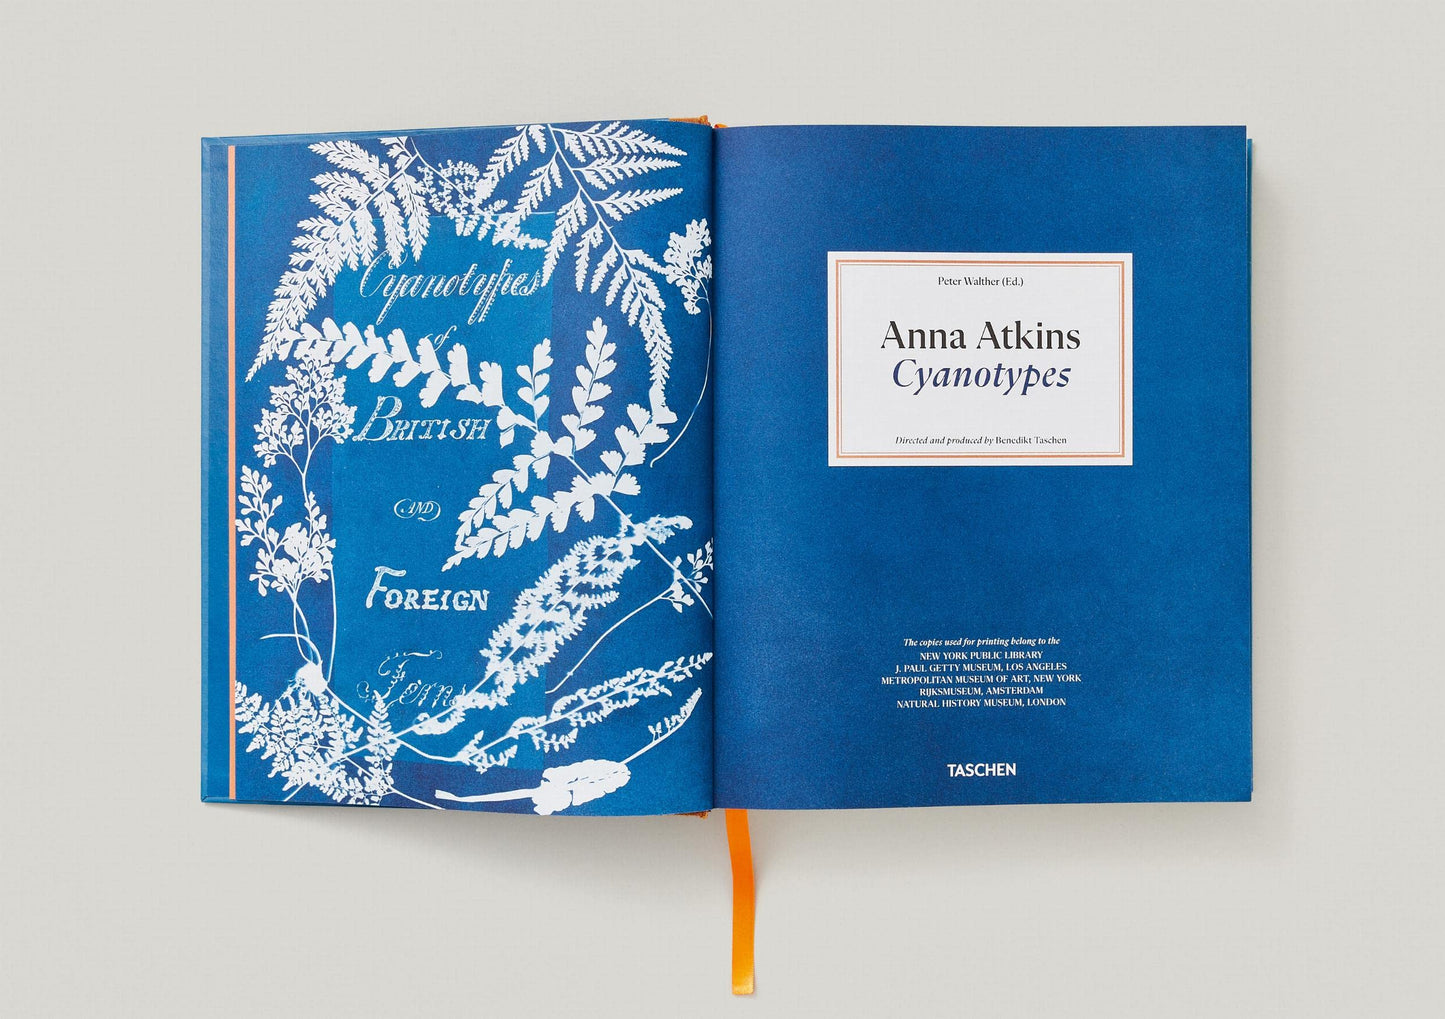 Anna Atkins / Cyanotypes